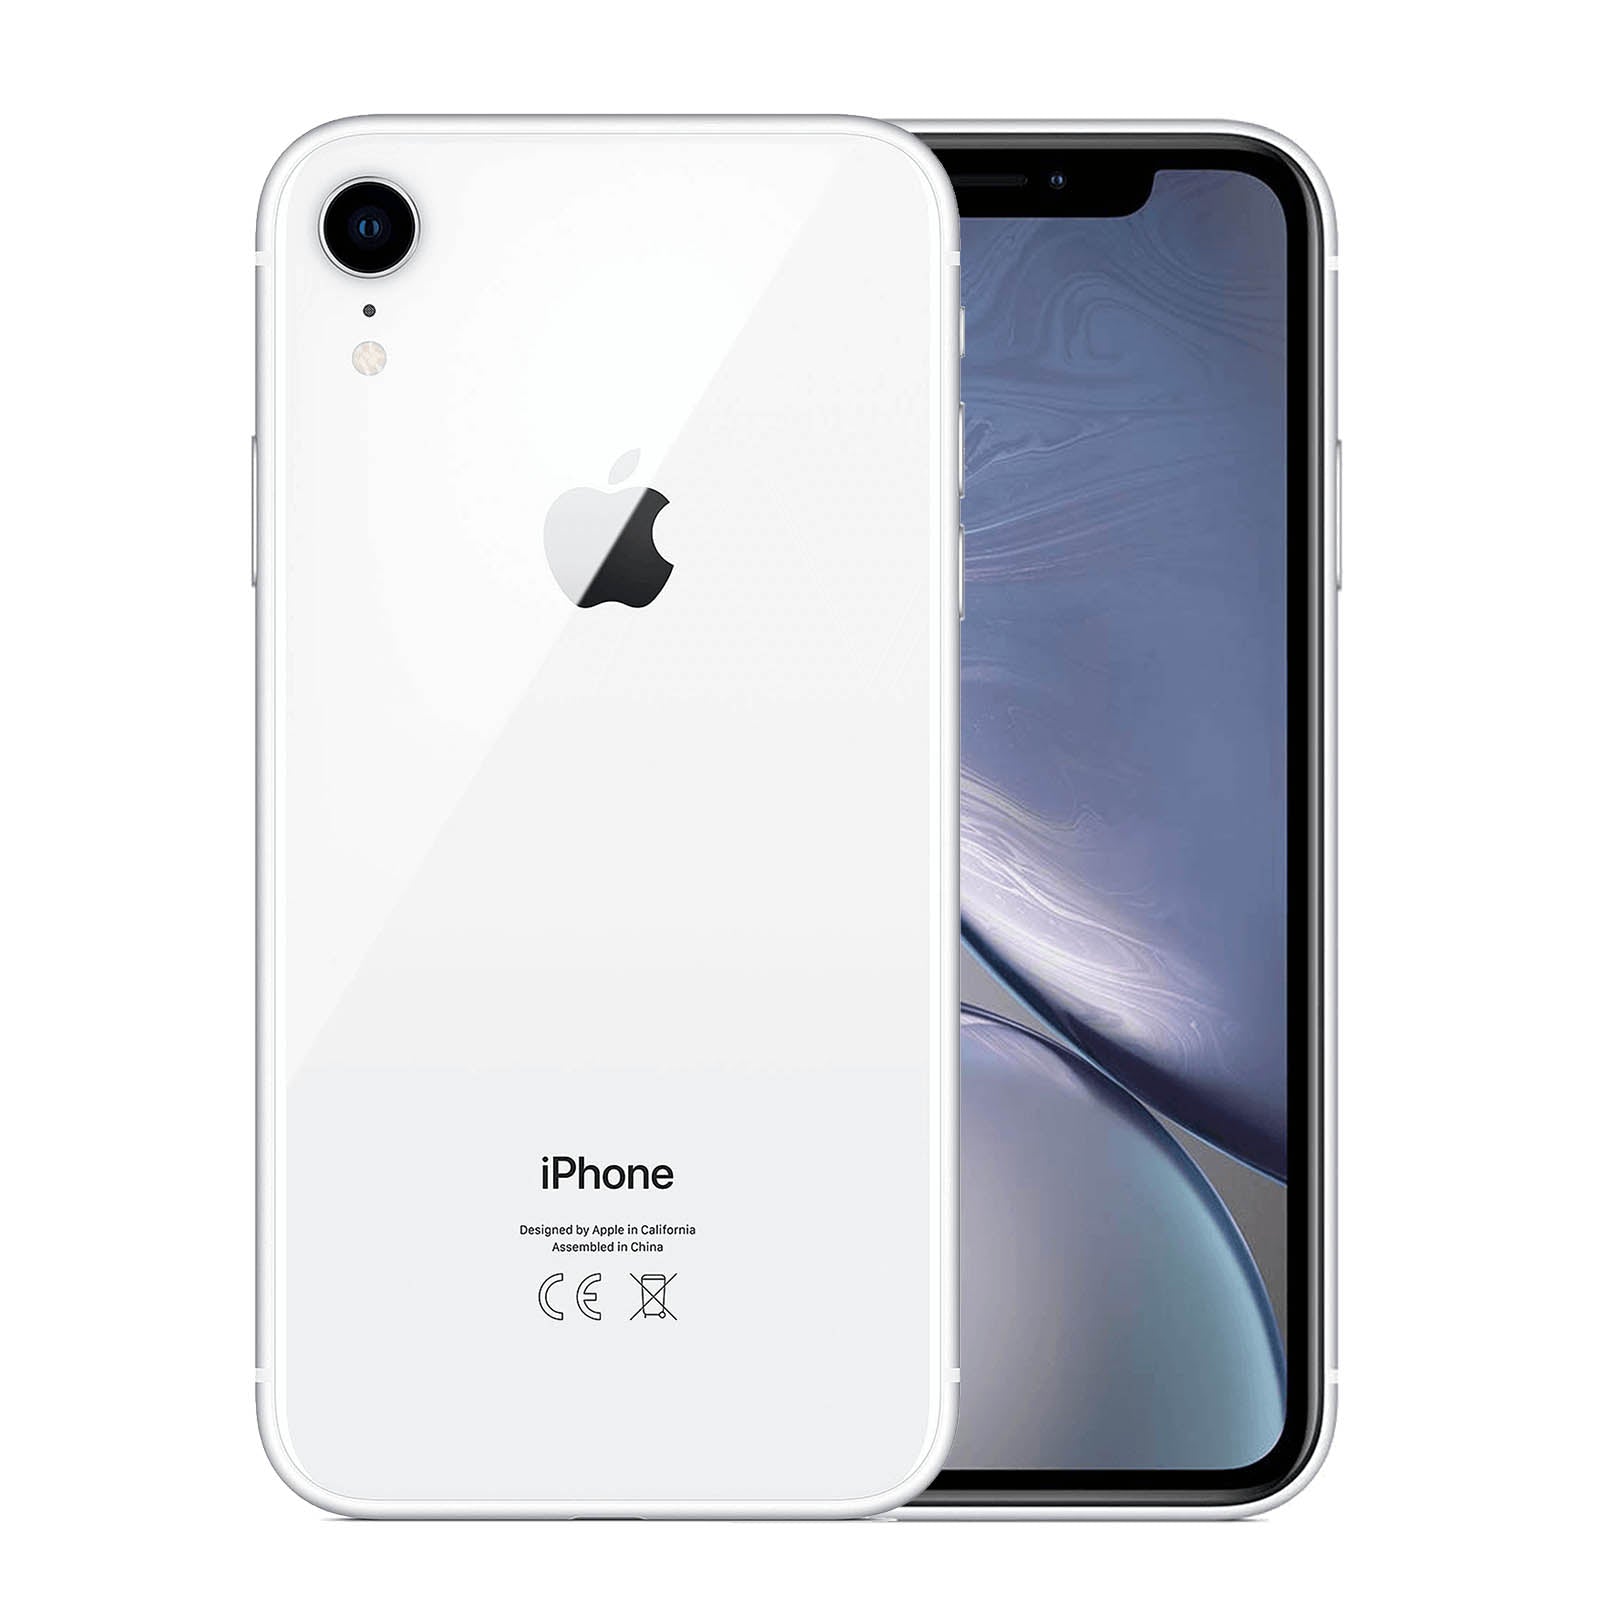 Apple iPhone XR 128GB White Good - Unlocked